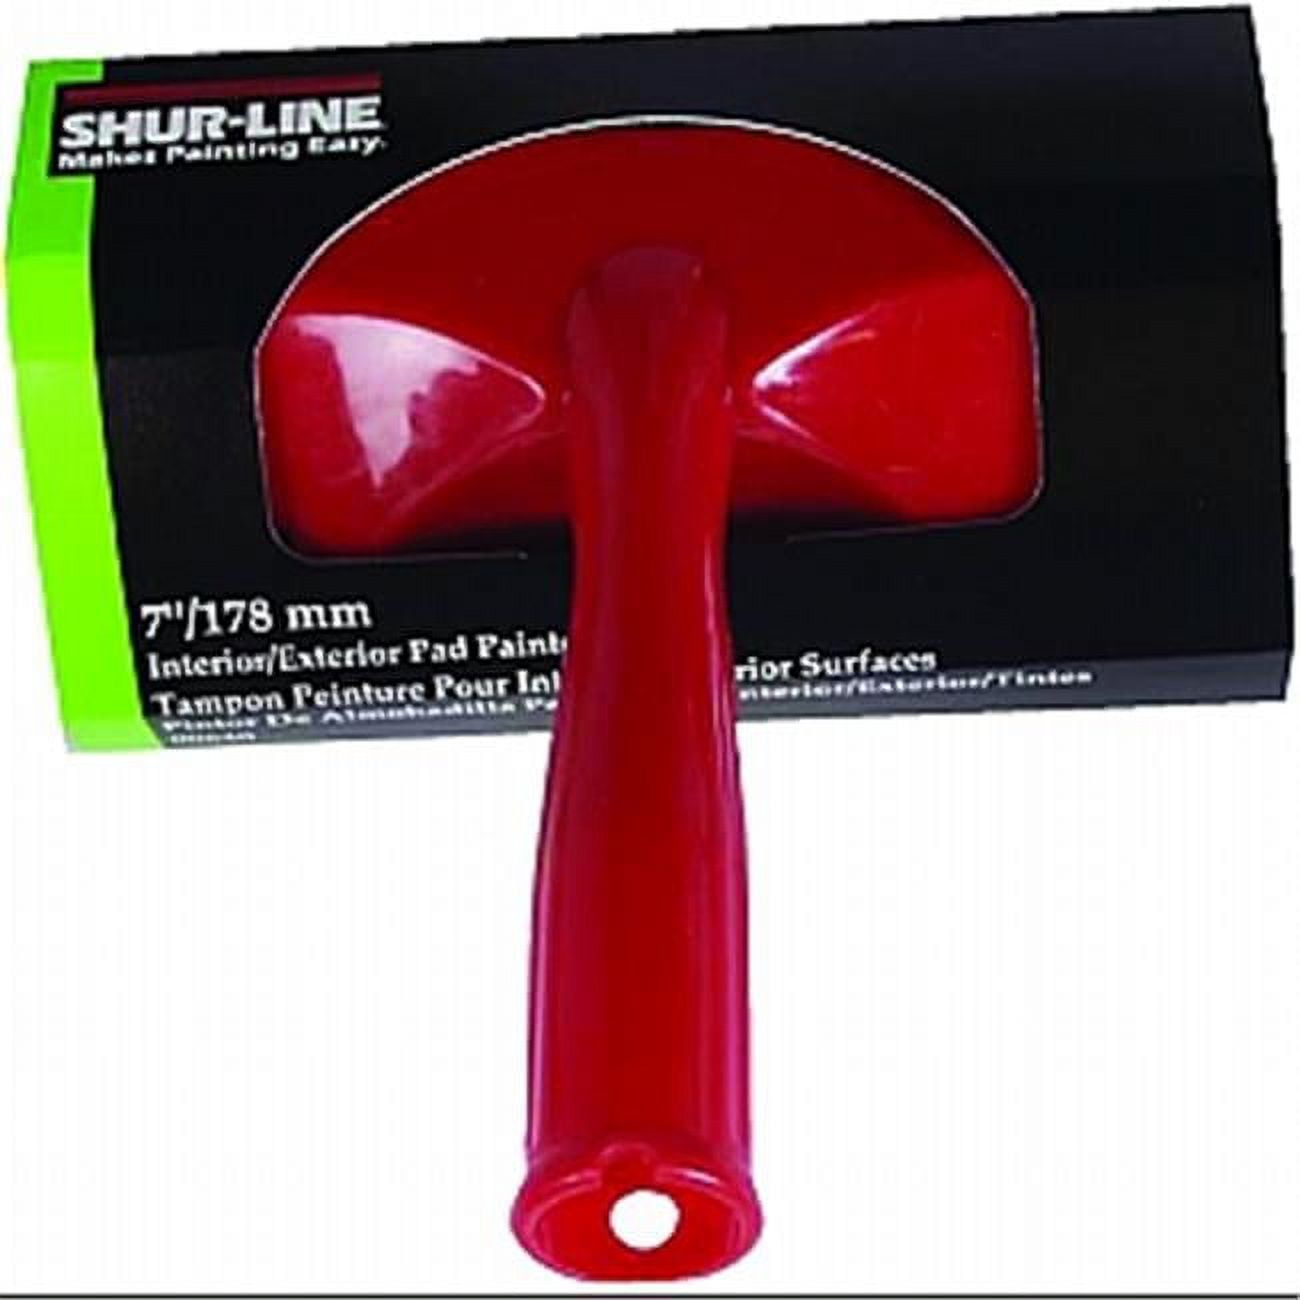 Shur-Line 812130 7-inch Paint Pad Applicator